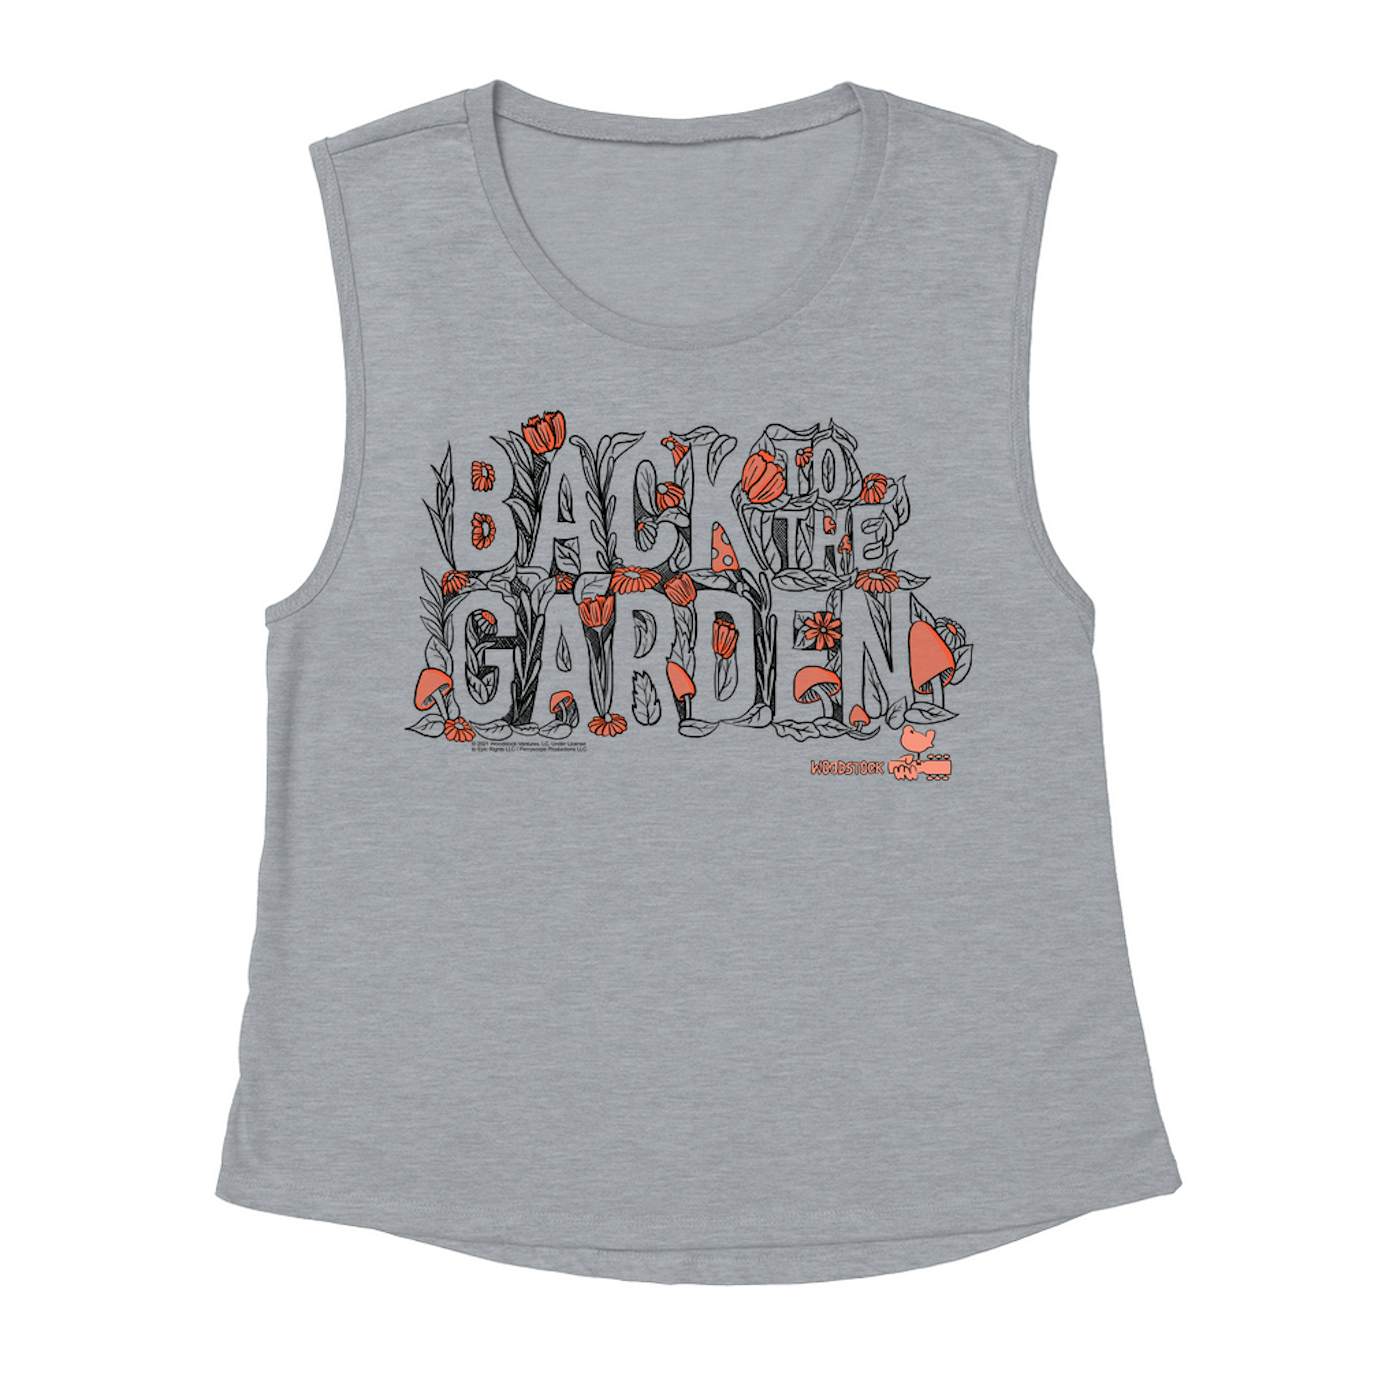 Woodstock Ladies' Muscle Tank Top | Back To The Garden Woodstock Shirt